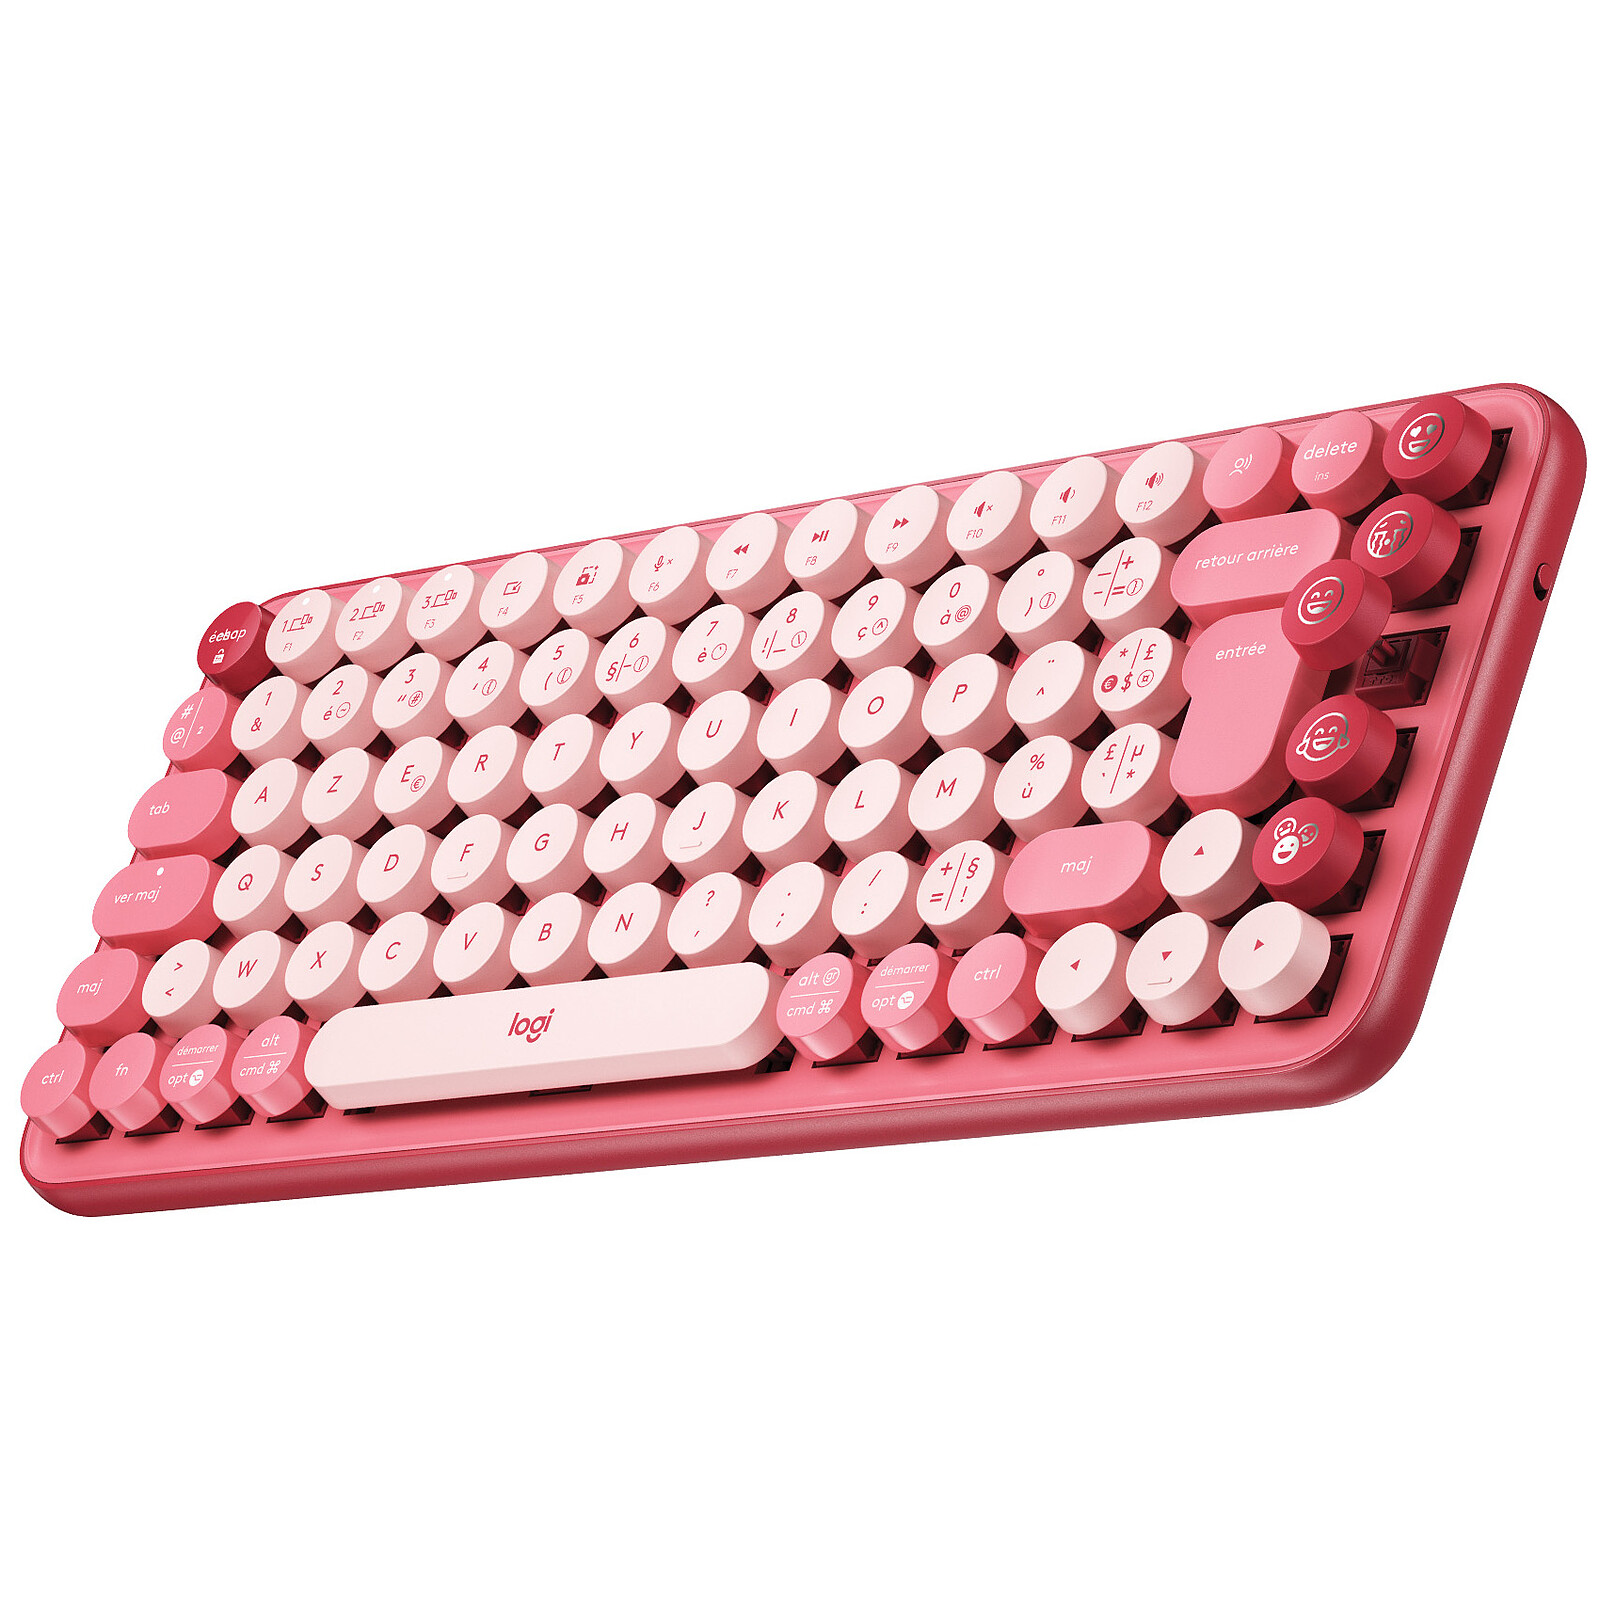 Logitech G Pro Mechanical Gaming Keyboard - Clavier PC - Garantie 3 ans  LDLC